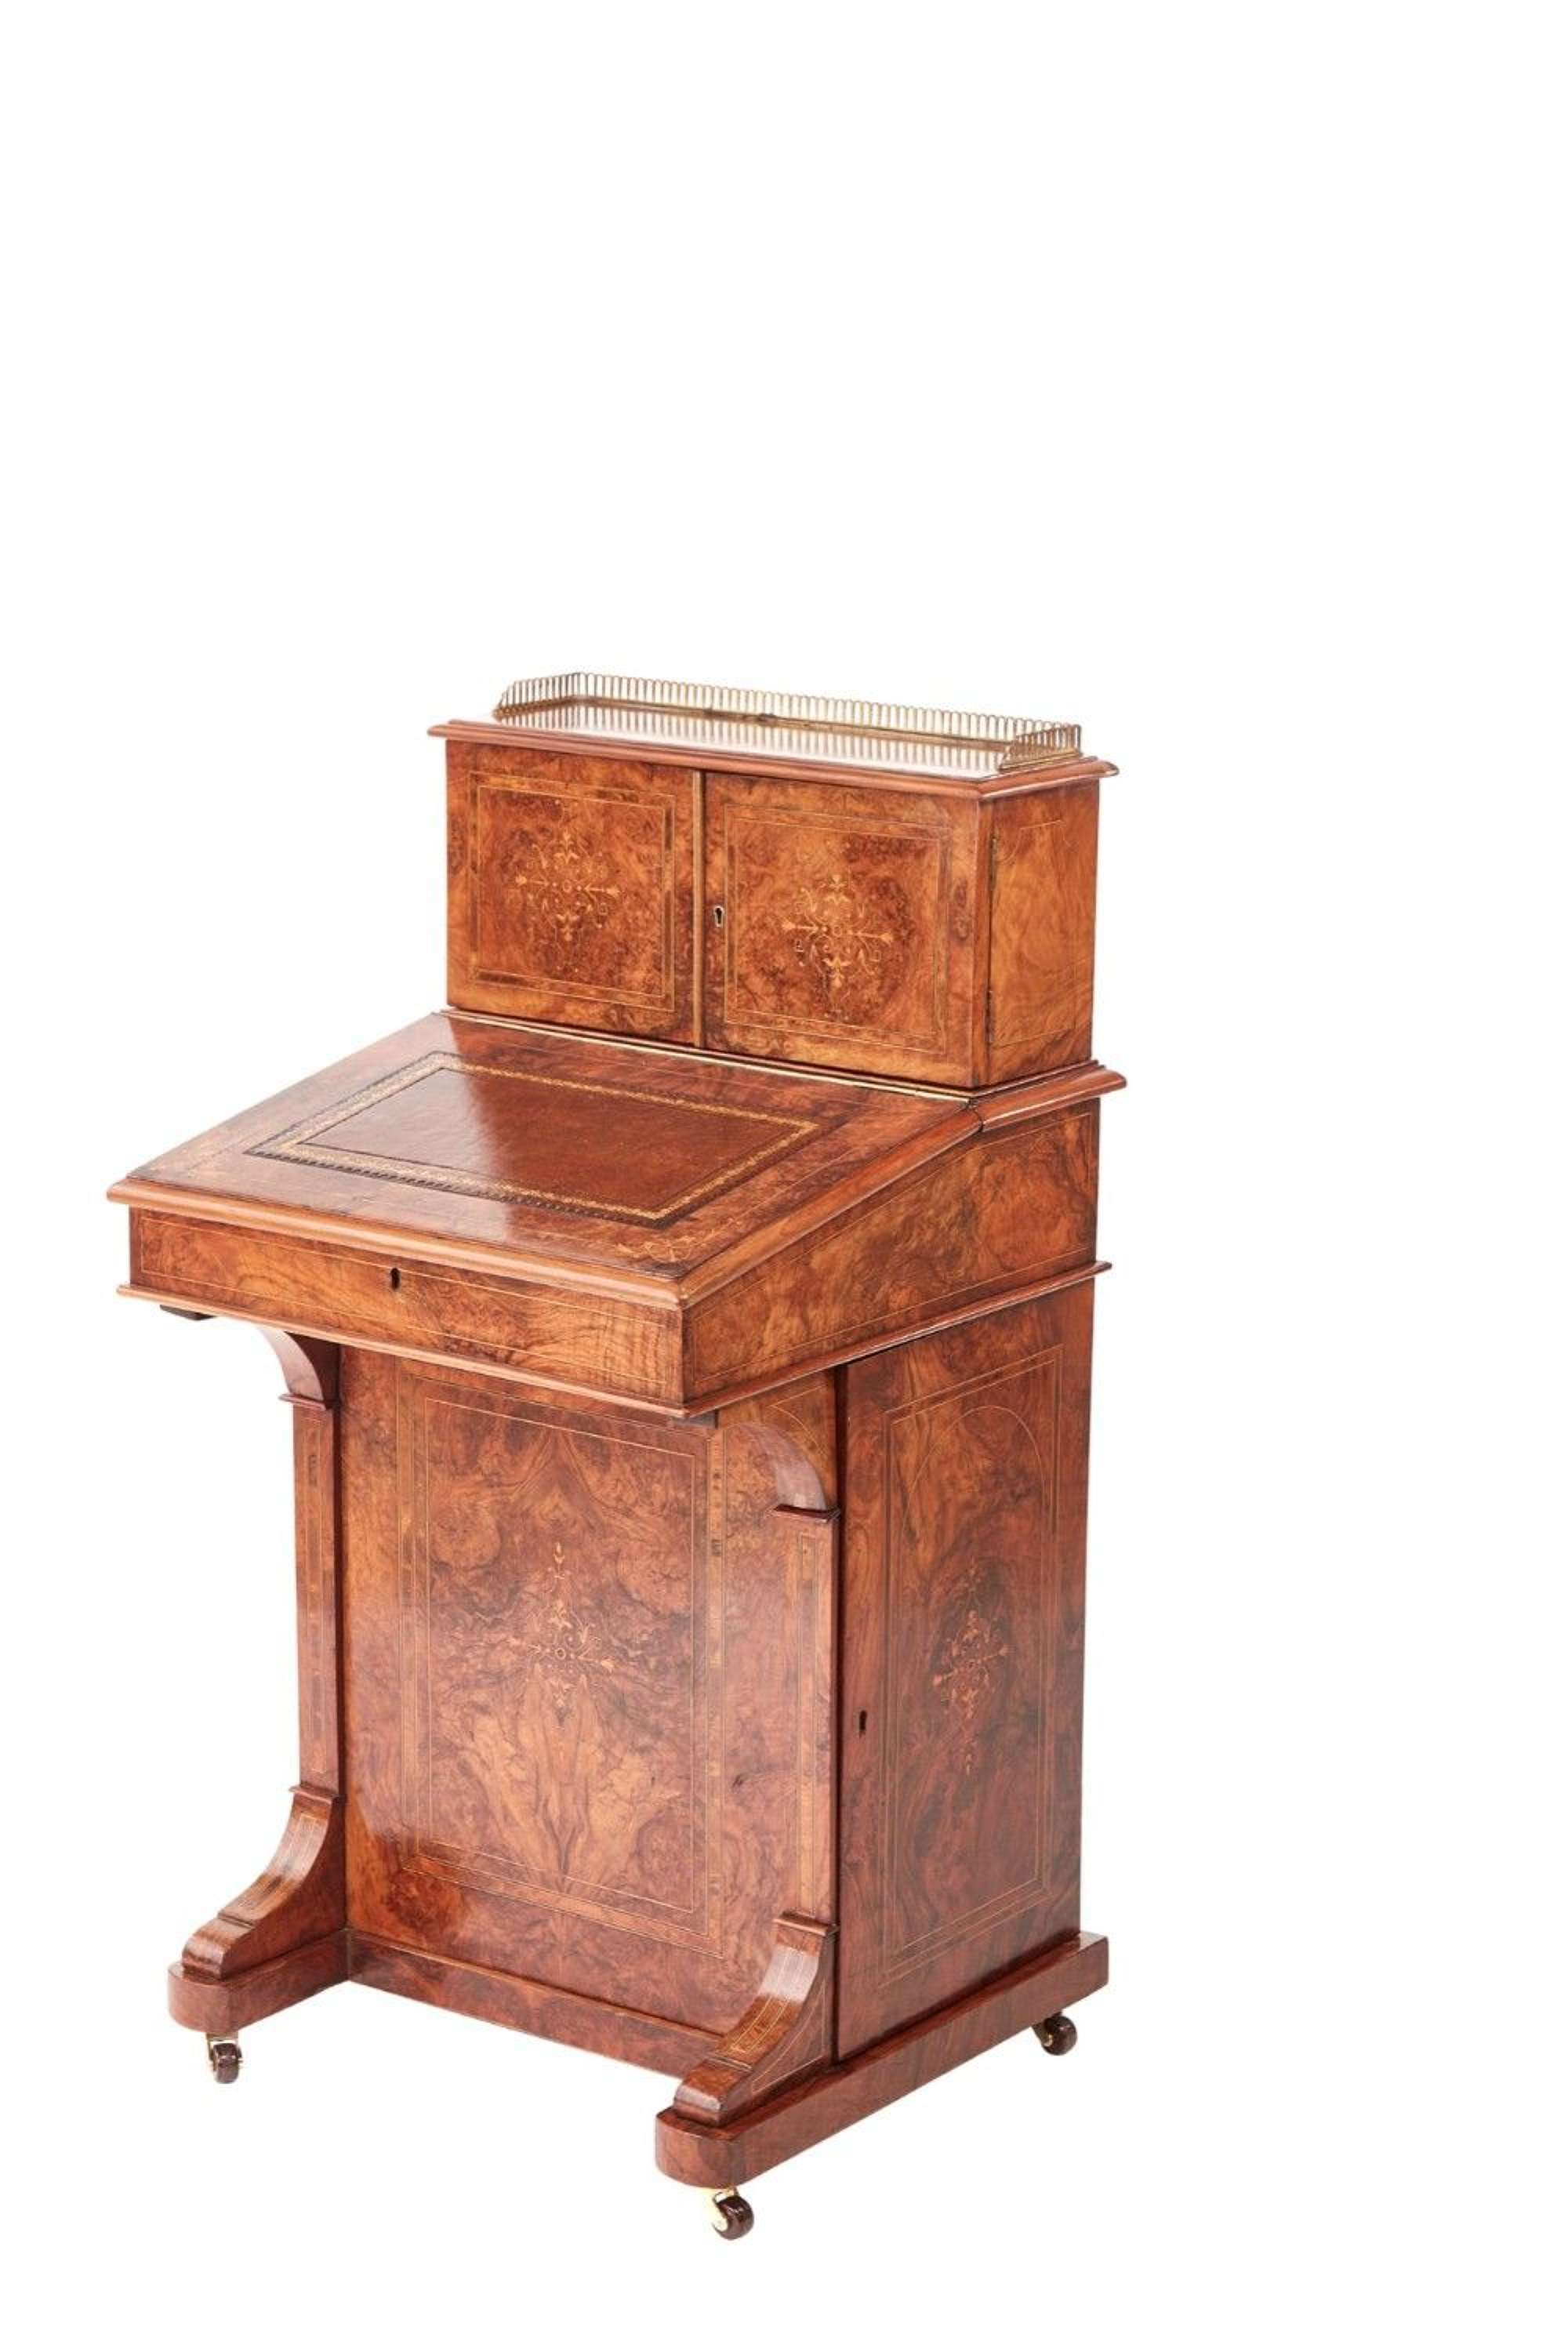 Outstanding Quality Antique Victorian Inlaid Burr Walnut Davenport